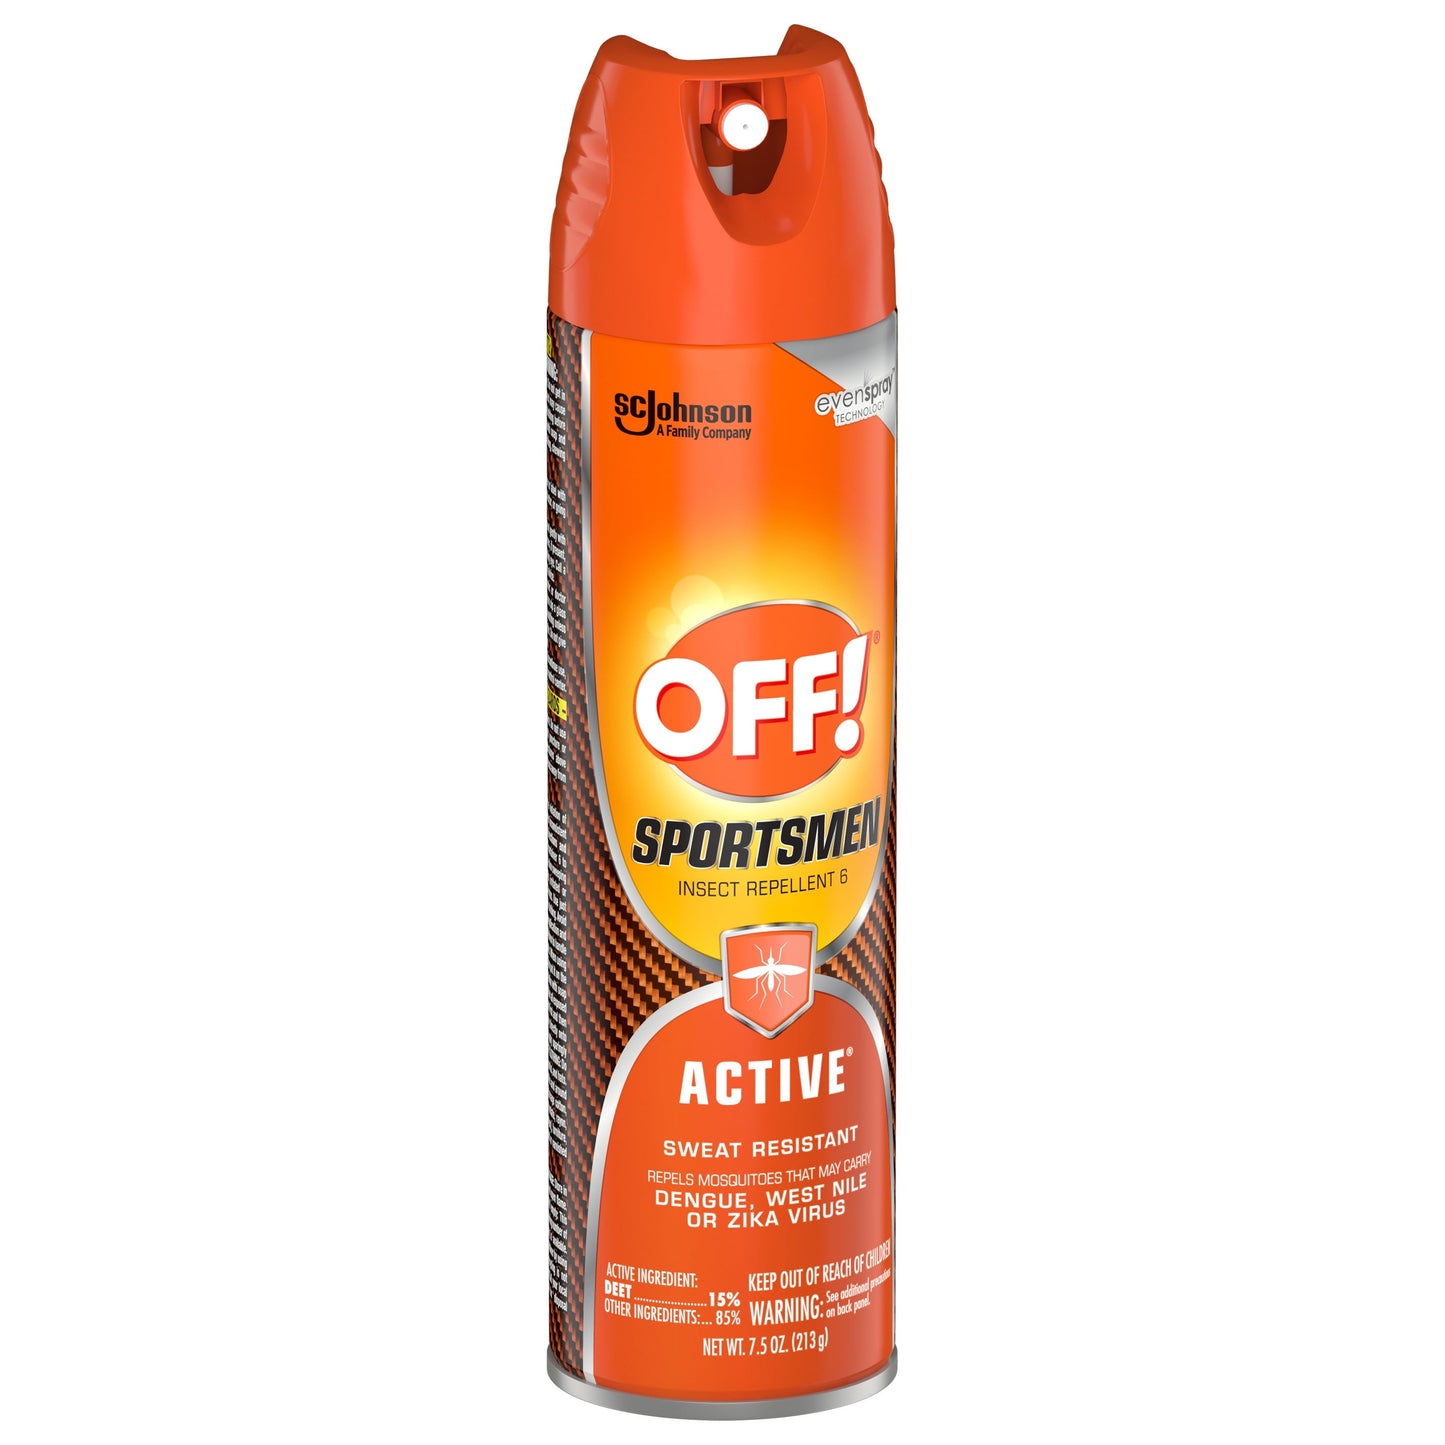 OFF! Sportsmen Active Insect Repellent VI, 7.5 fl oz